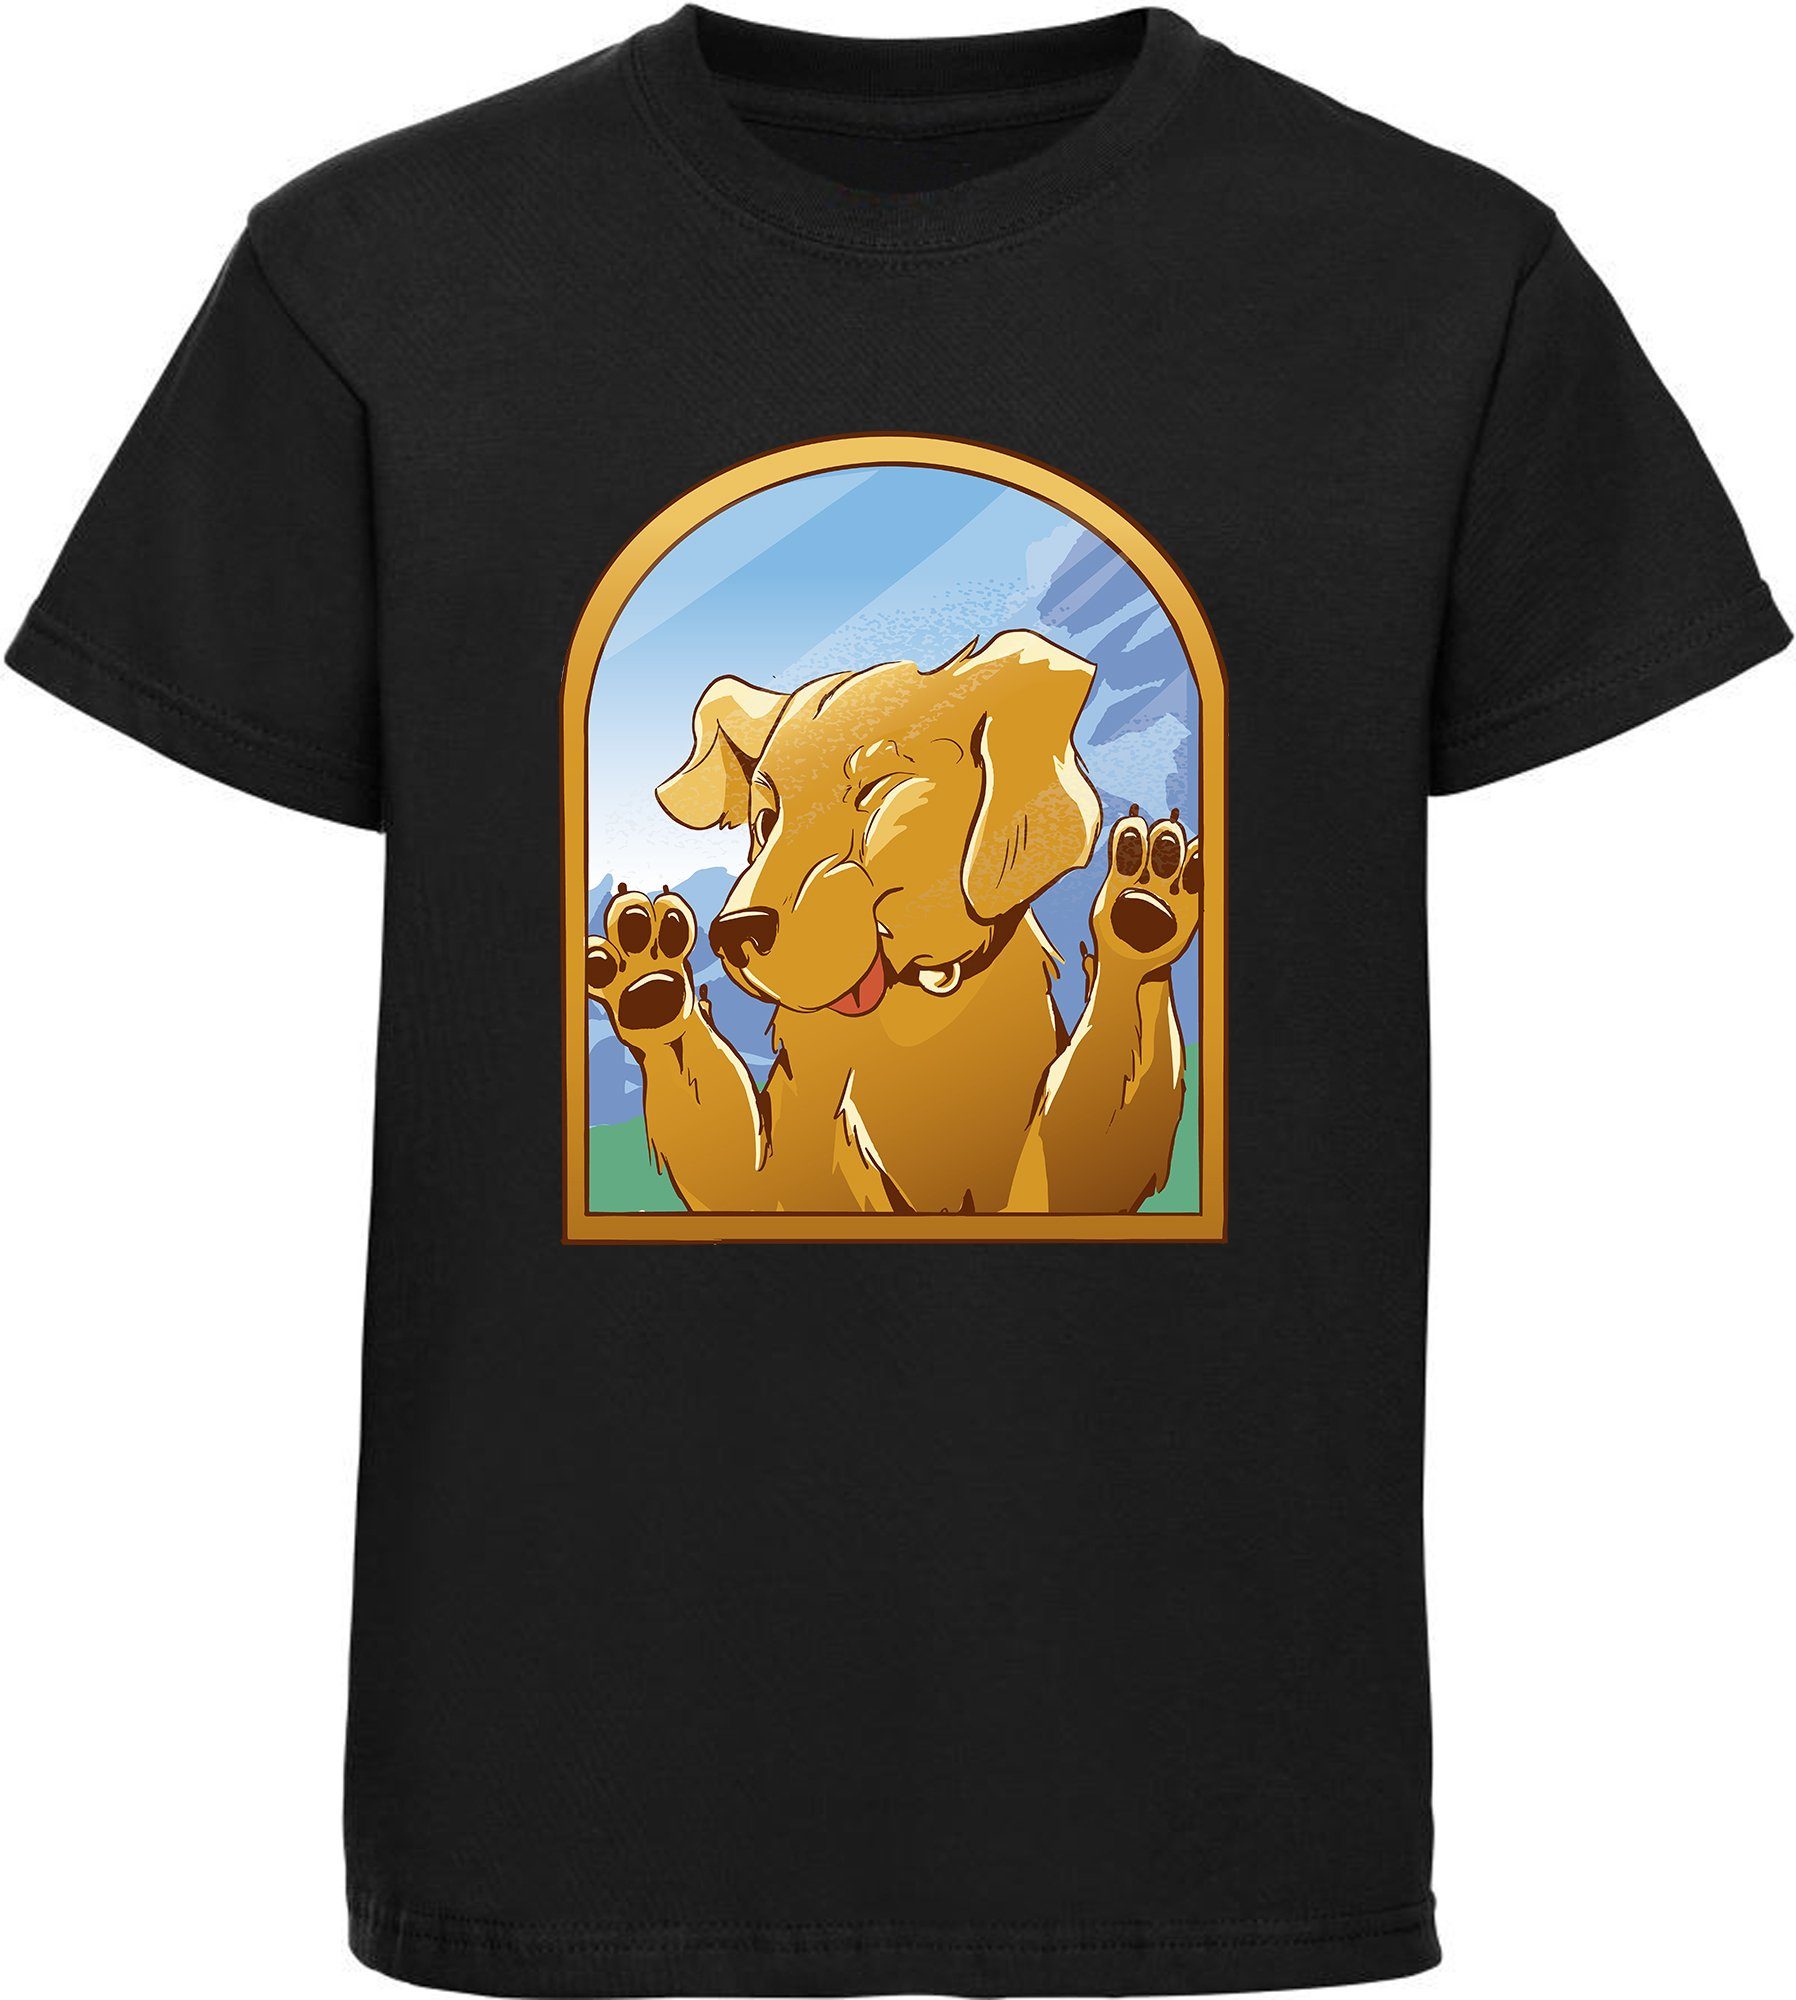 MyDesign24 Print-Shirt bedrucktes Kinder Hunde T-Shirt - Labrador gegen Fenster Baumwollshirt mit Aufdruck, i222 schwarz | T-Shirts